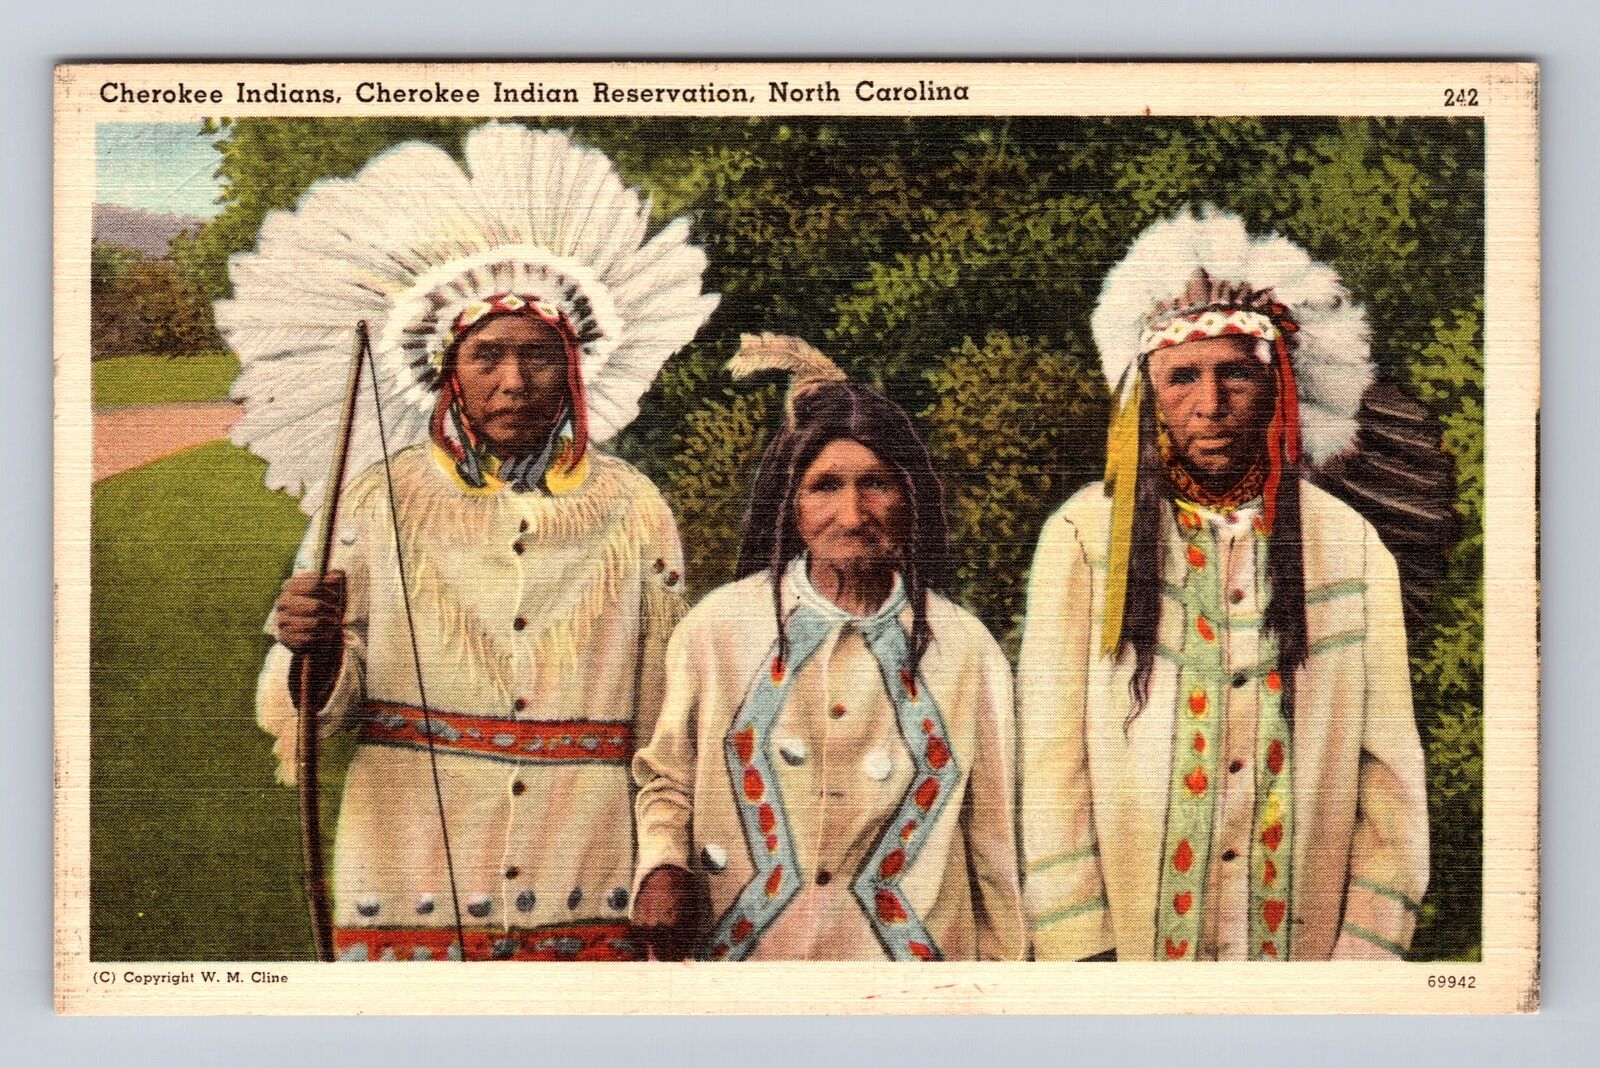 NC-North Carolina, Cherokee People Standing Together, Antique, Vintage Postcard